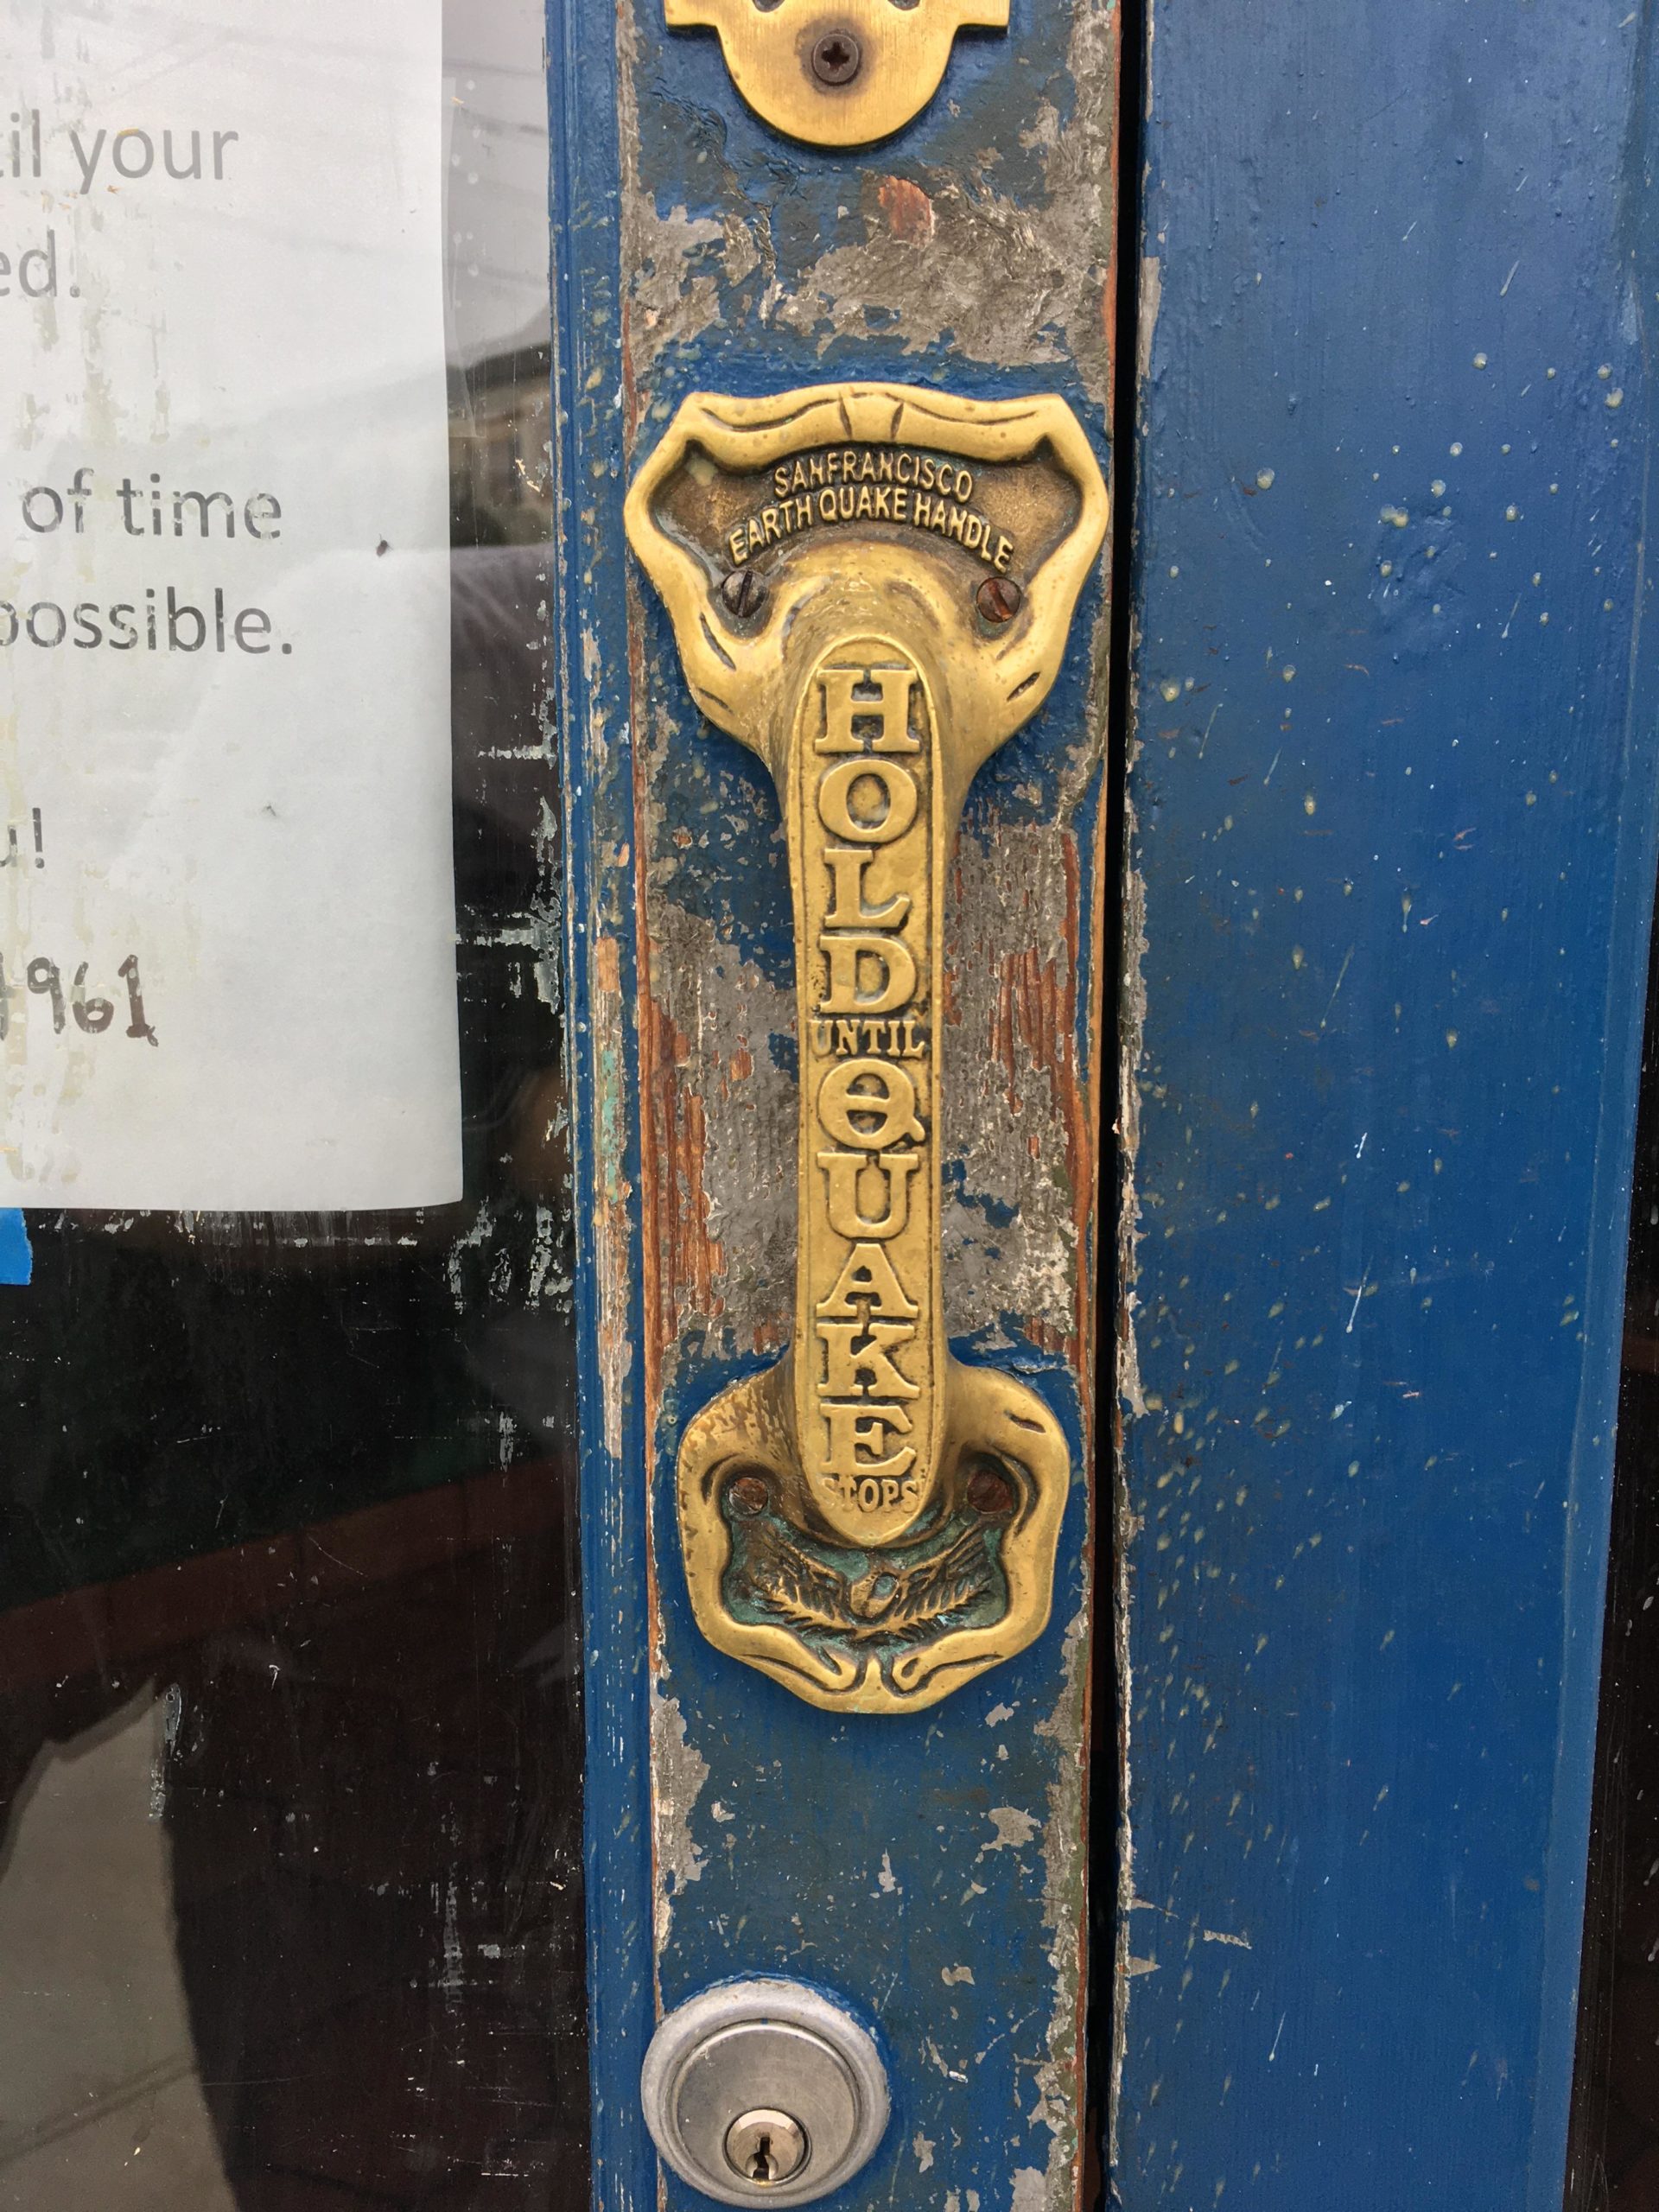 This+earthquake+door+handle+in+San+Francisco.